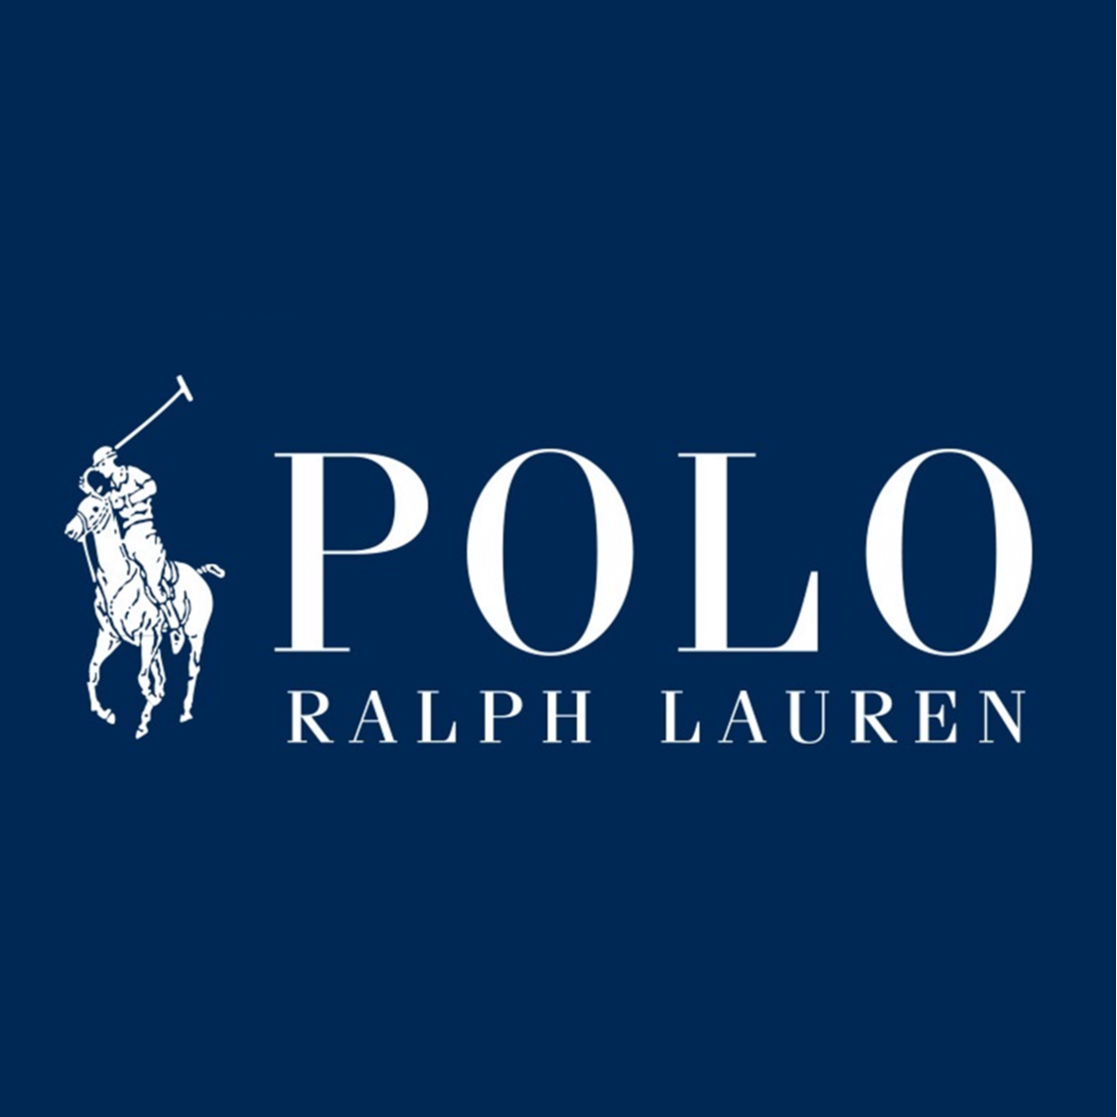 Shop online with Polo Ralph Lauren now! Visit Polo Ralph Lauren on Lazada.